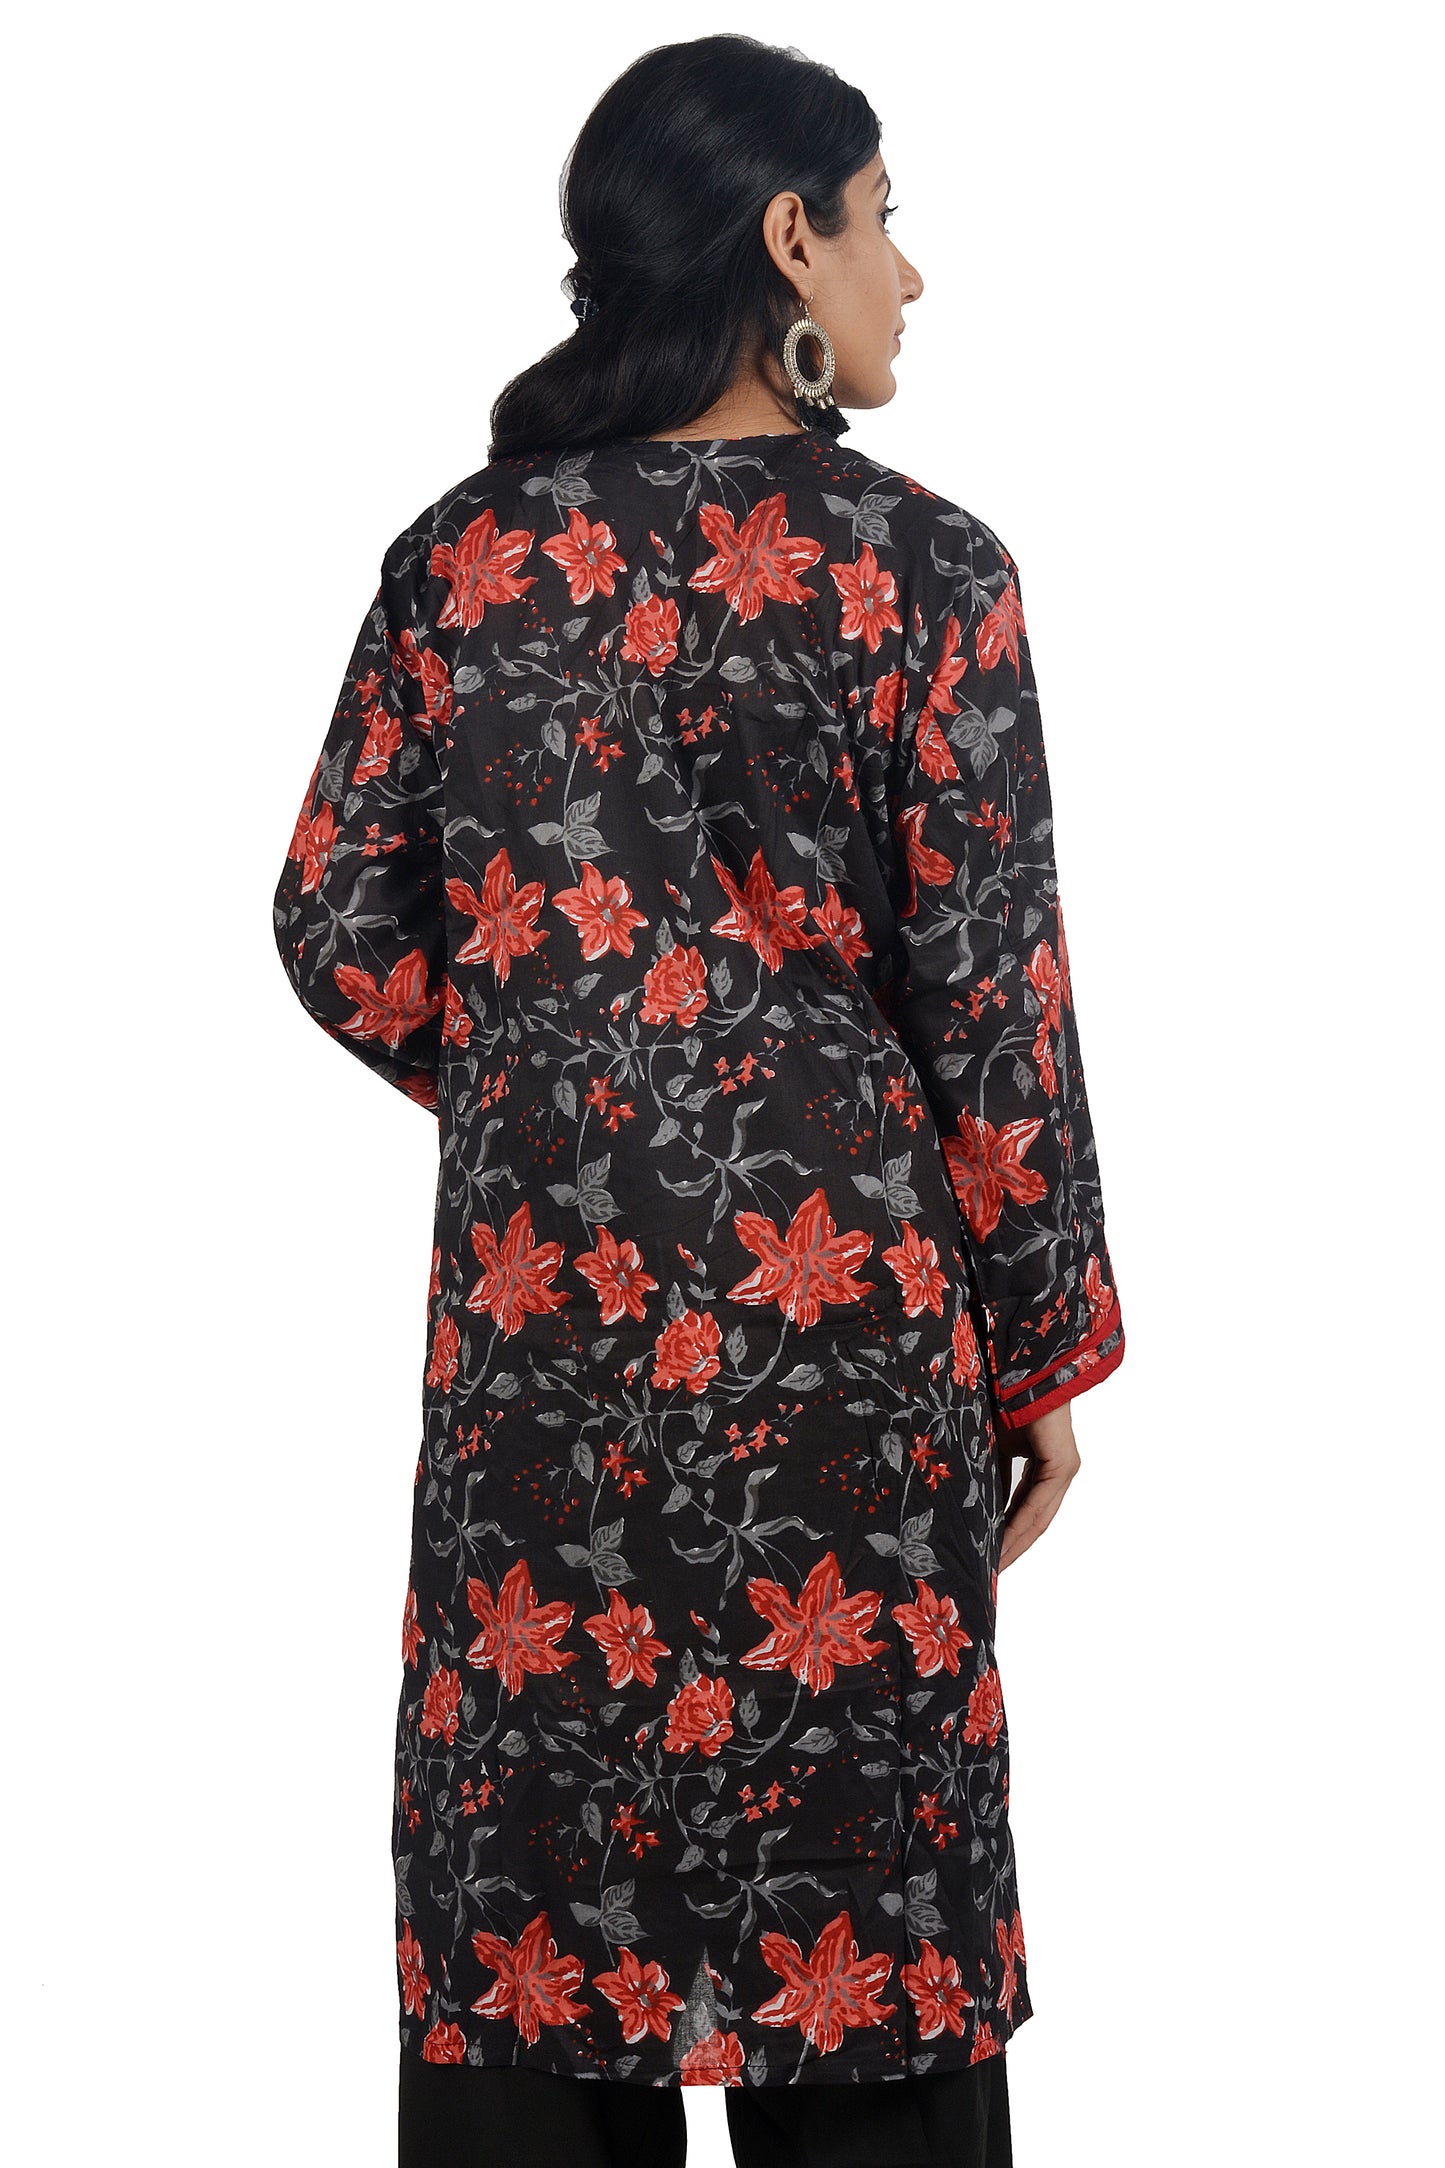 Red Black Cotton Salwar kameez Dress Plus Size 52 Full Sleeves